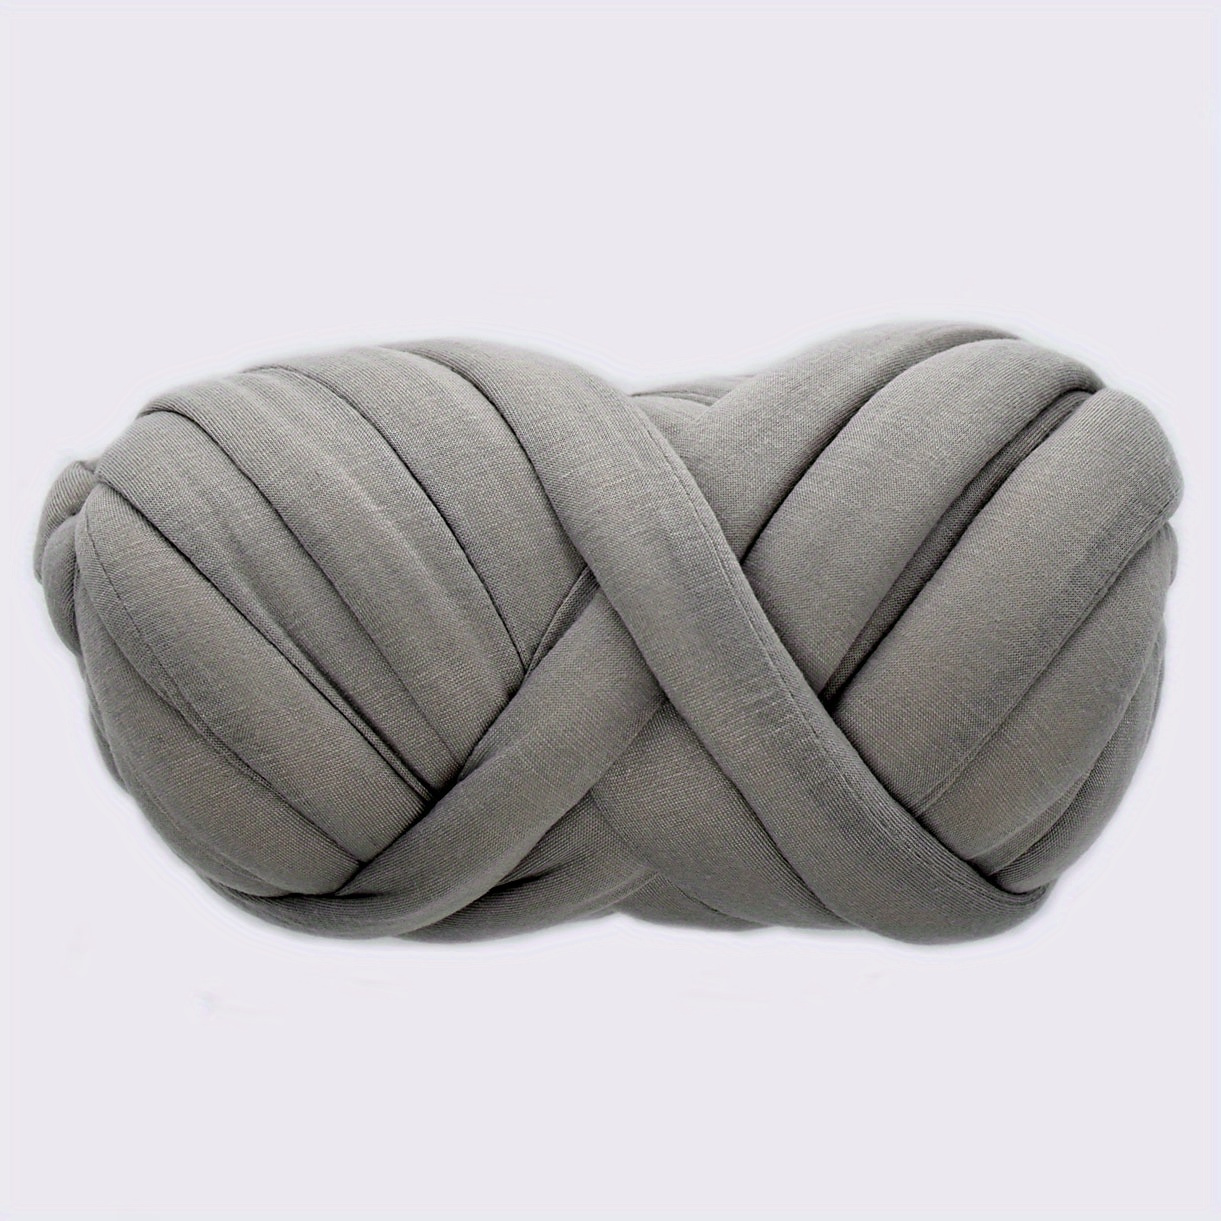 Bulky Chunky Yarn Super Soft Arm Knitting Roving Crochet Blanket Craft Grey